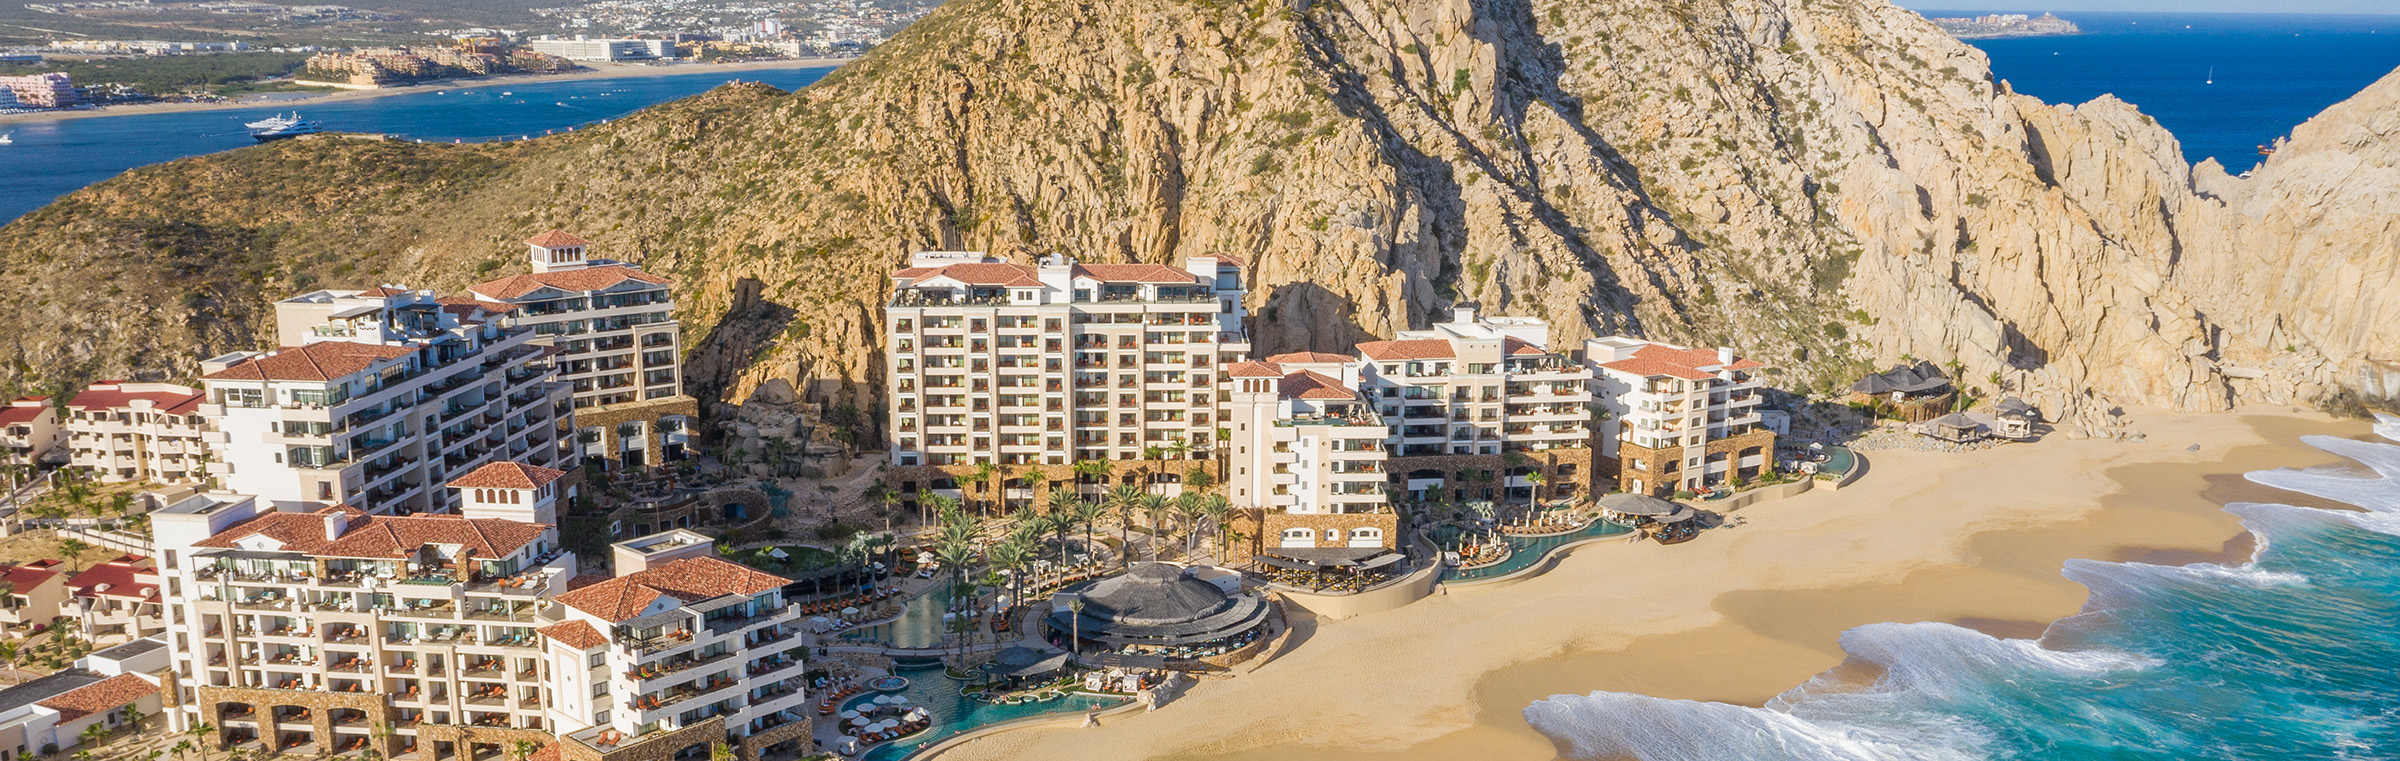 Grand Solmar Land's End Resort & Spa Cabo San Lucas Aerial